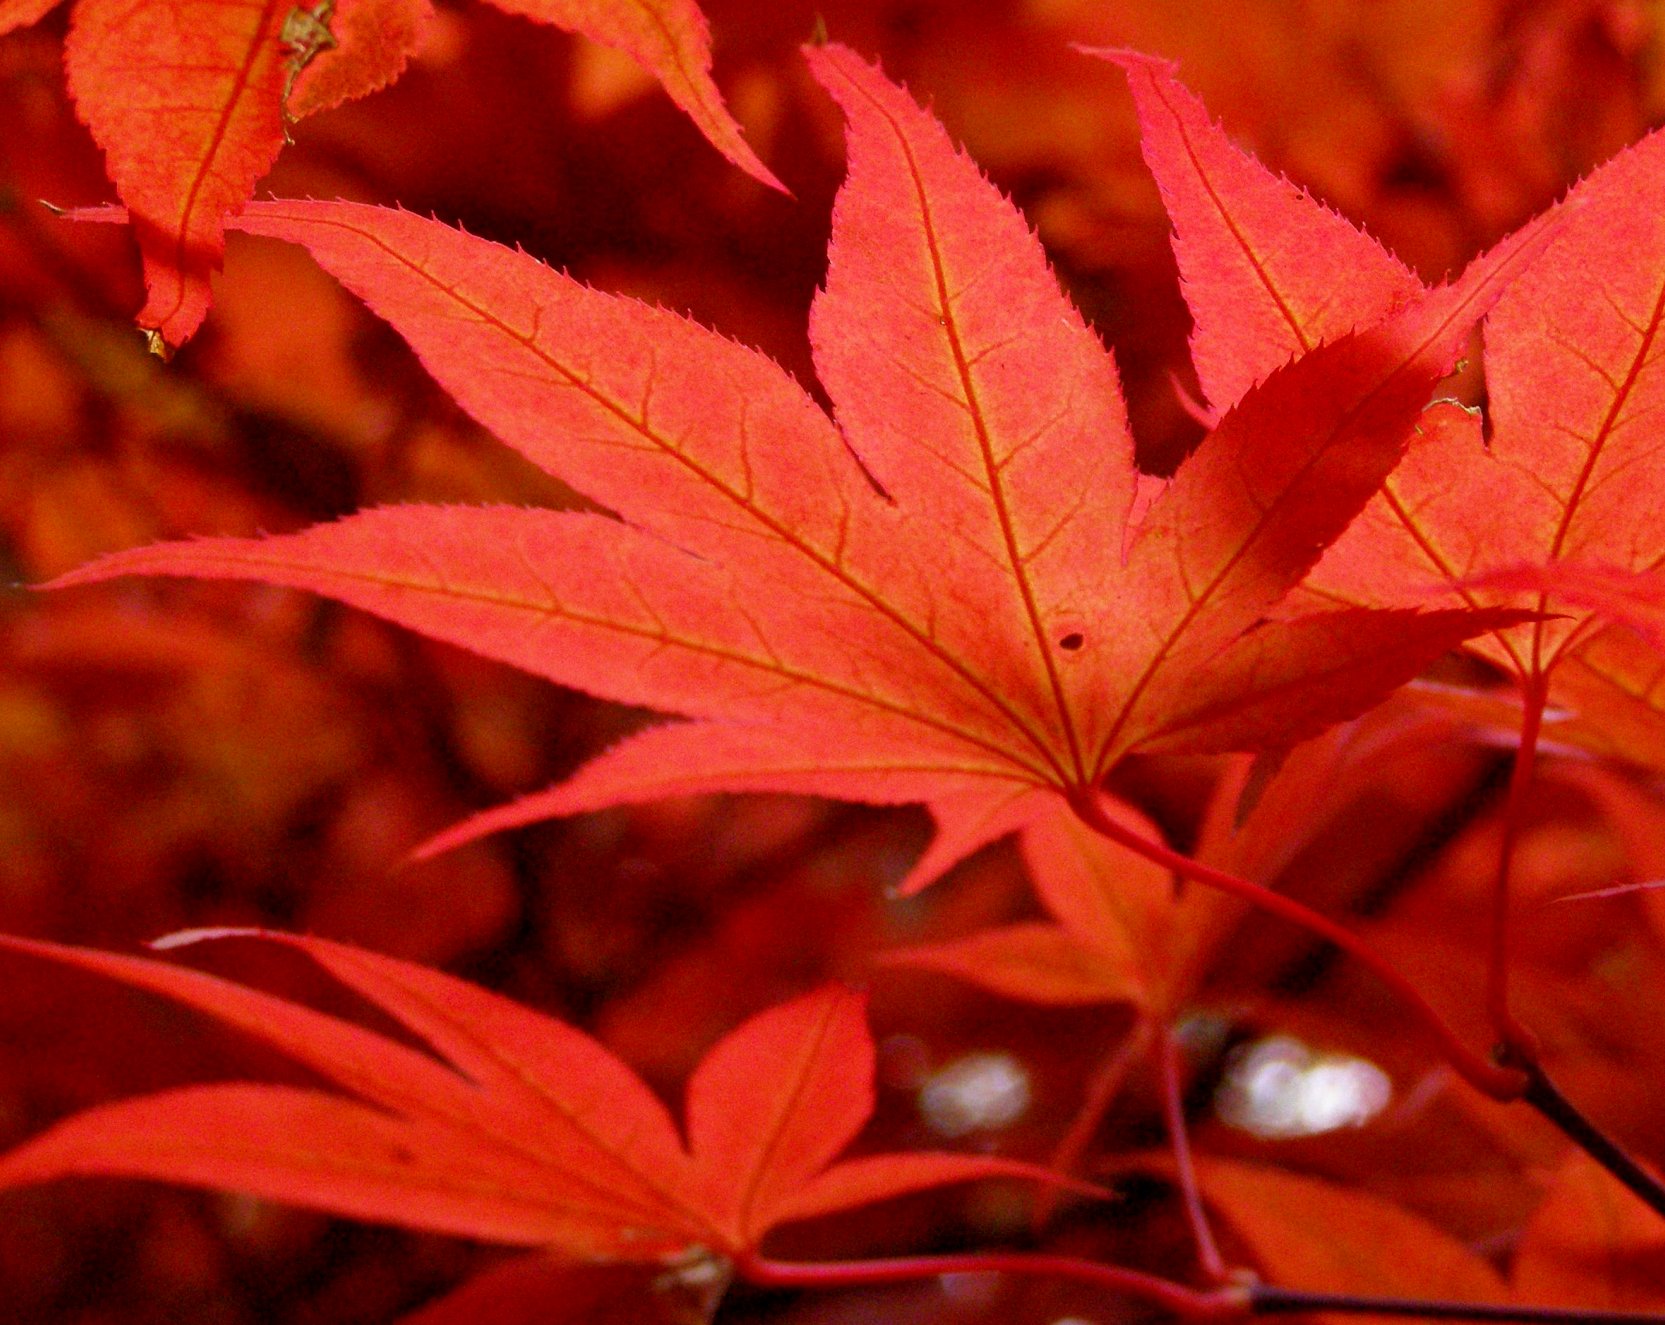 File:Maple leaves in October 2009.jpg - Wikimedia Commons